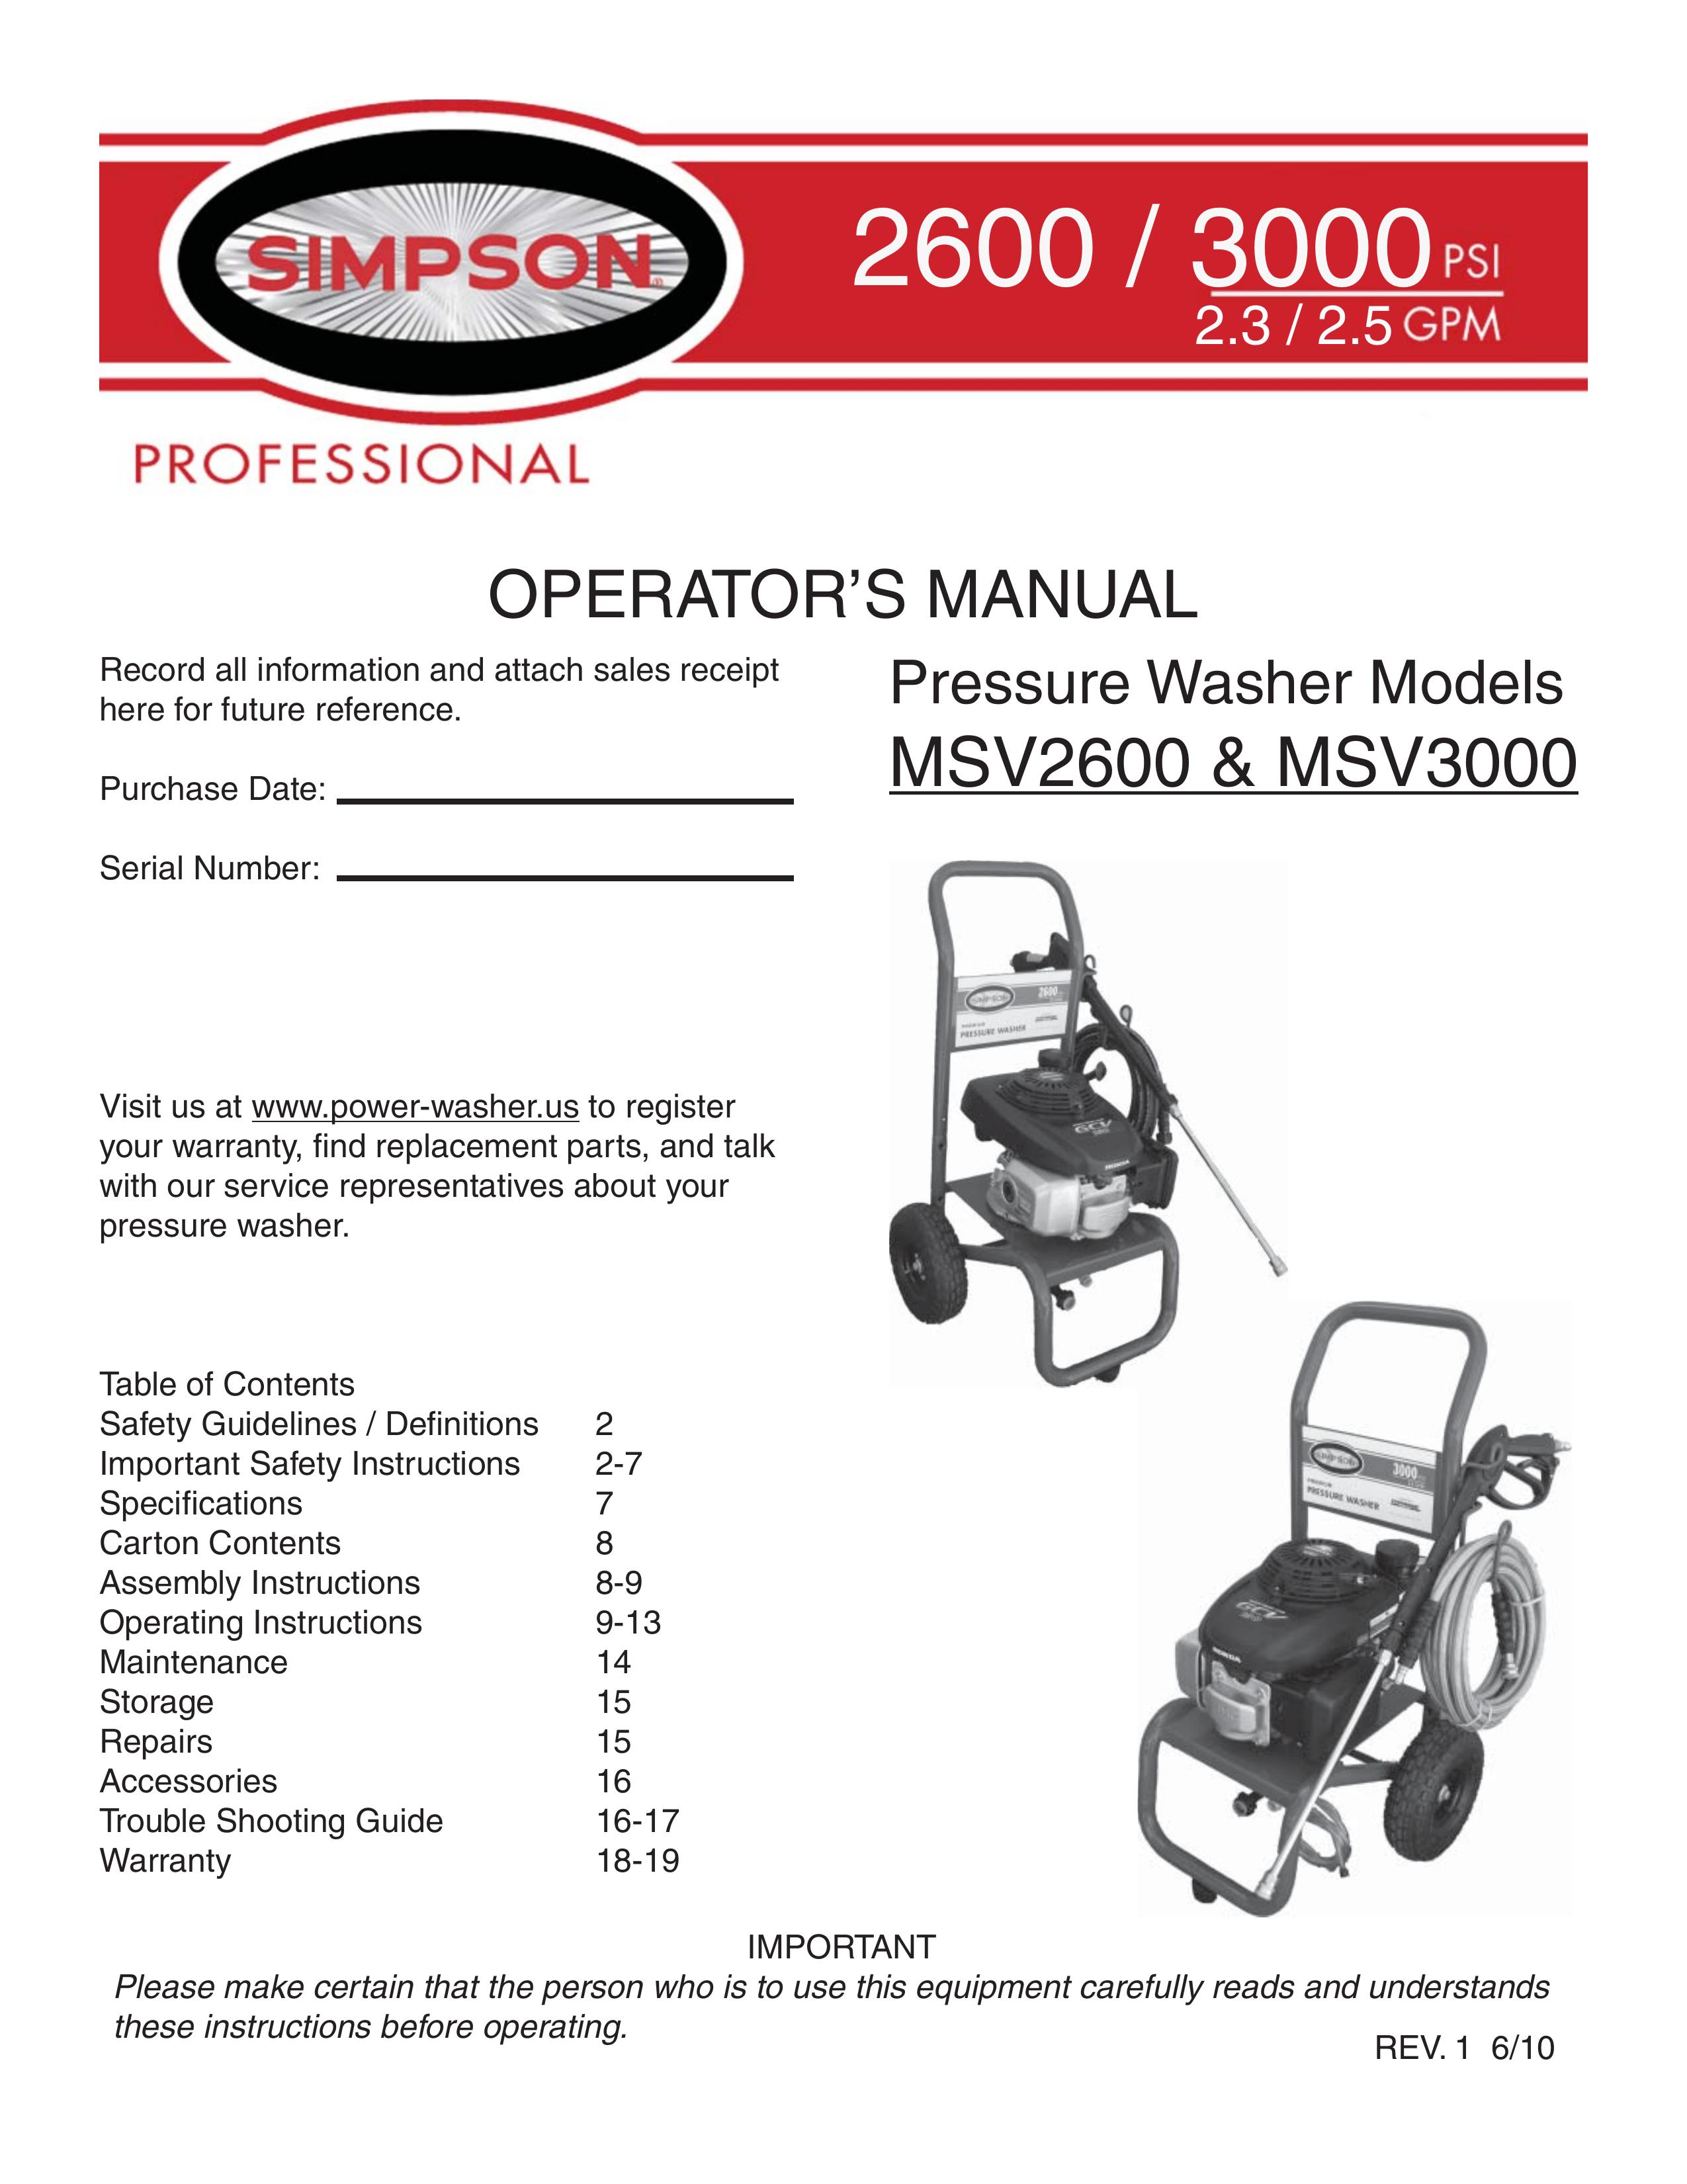 Simpson MSV2600 Pressure Washer User Manual